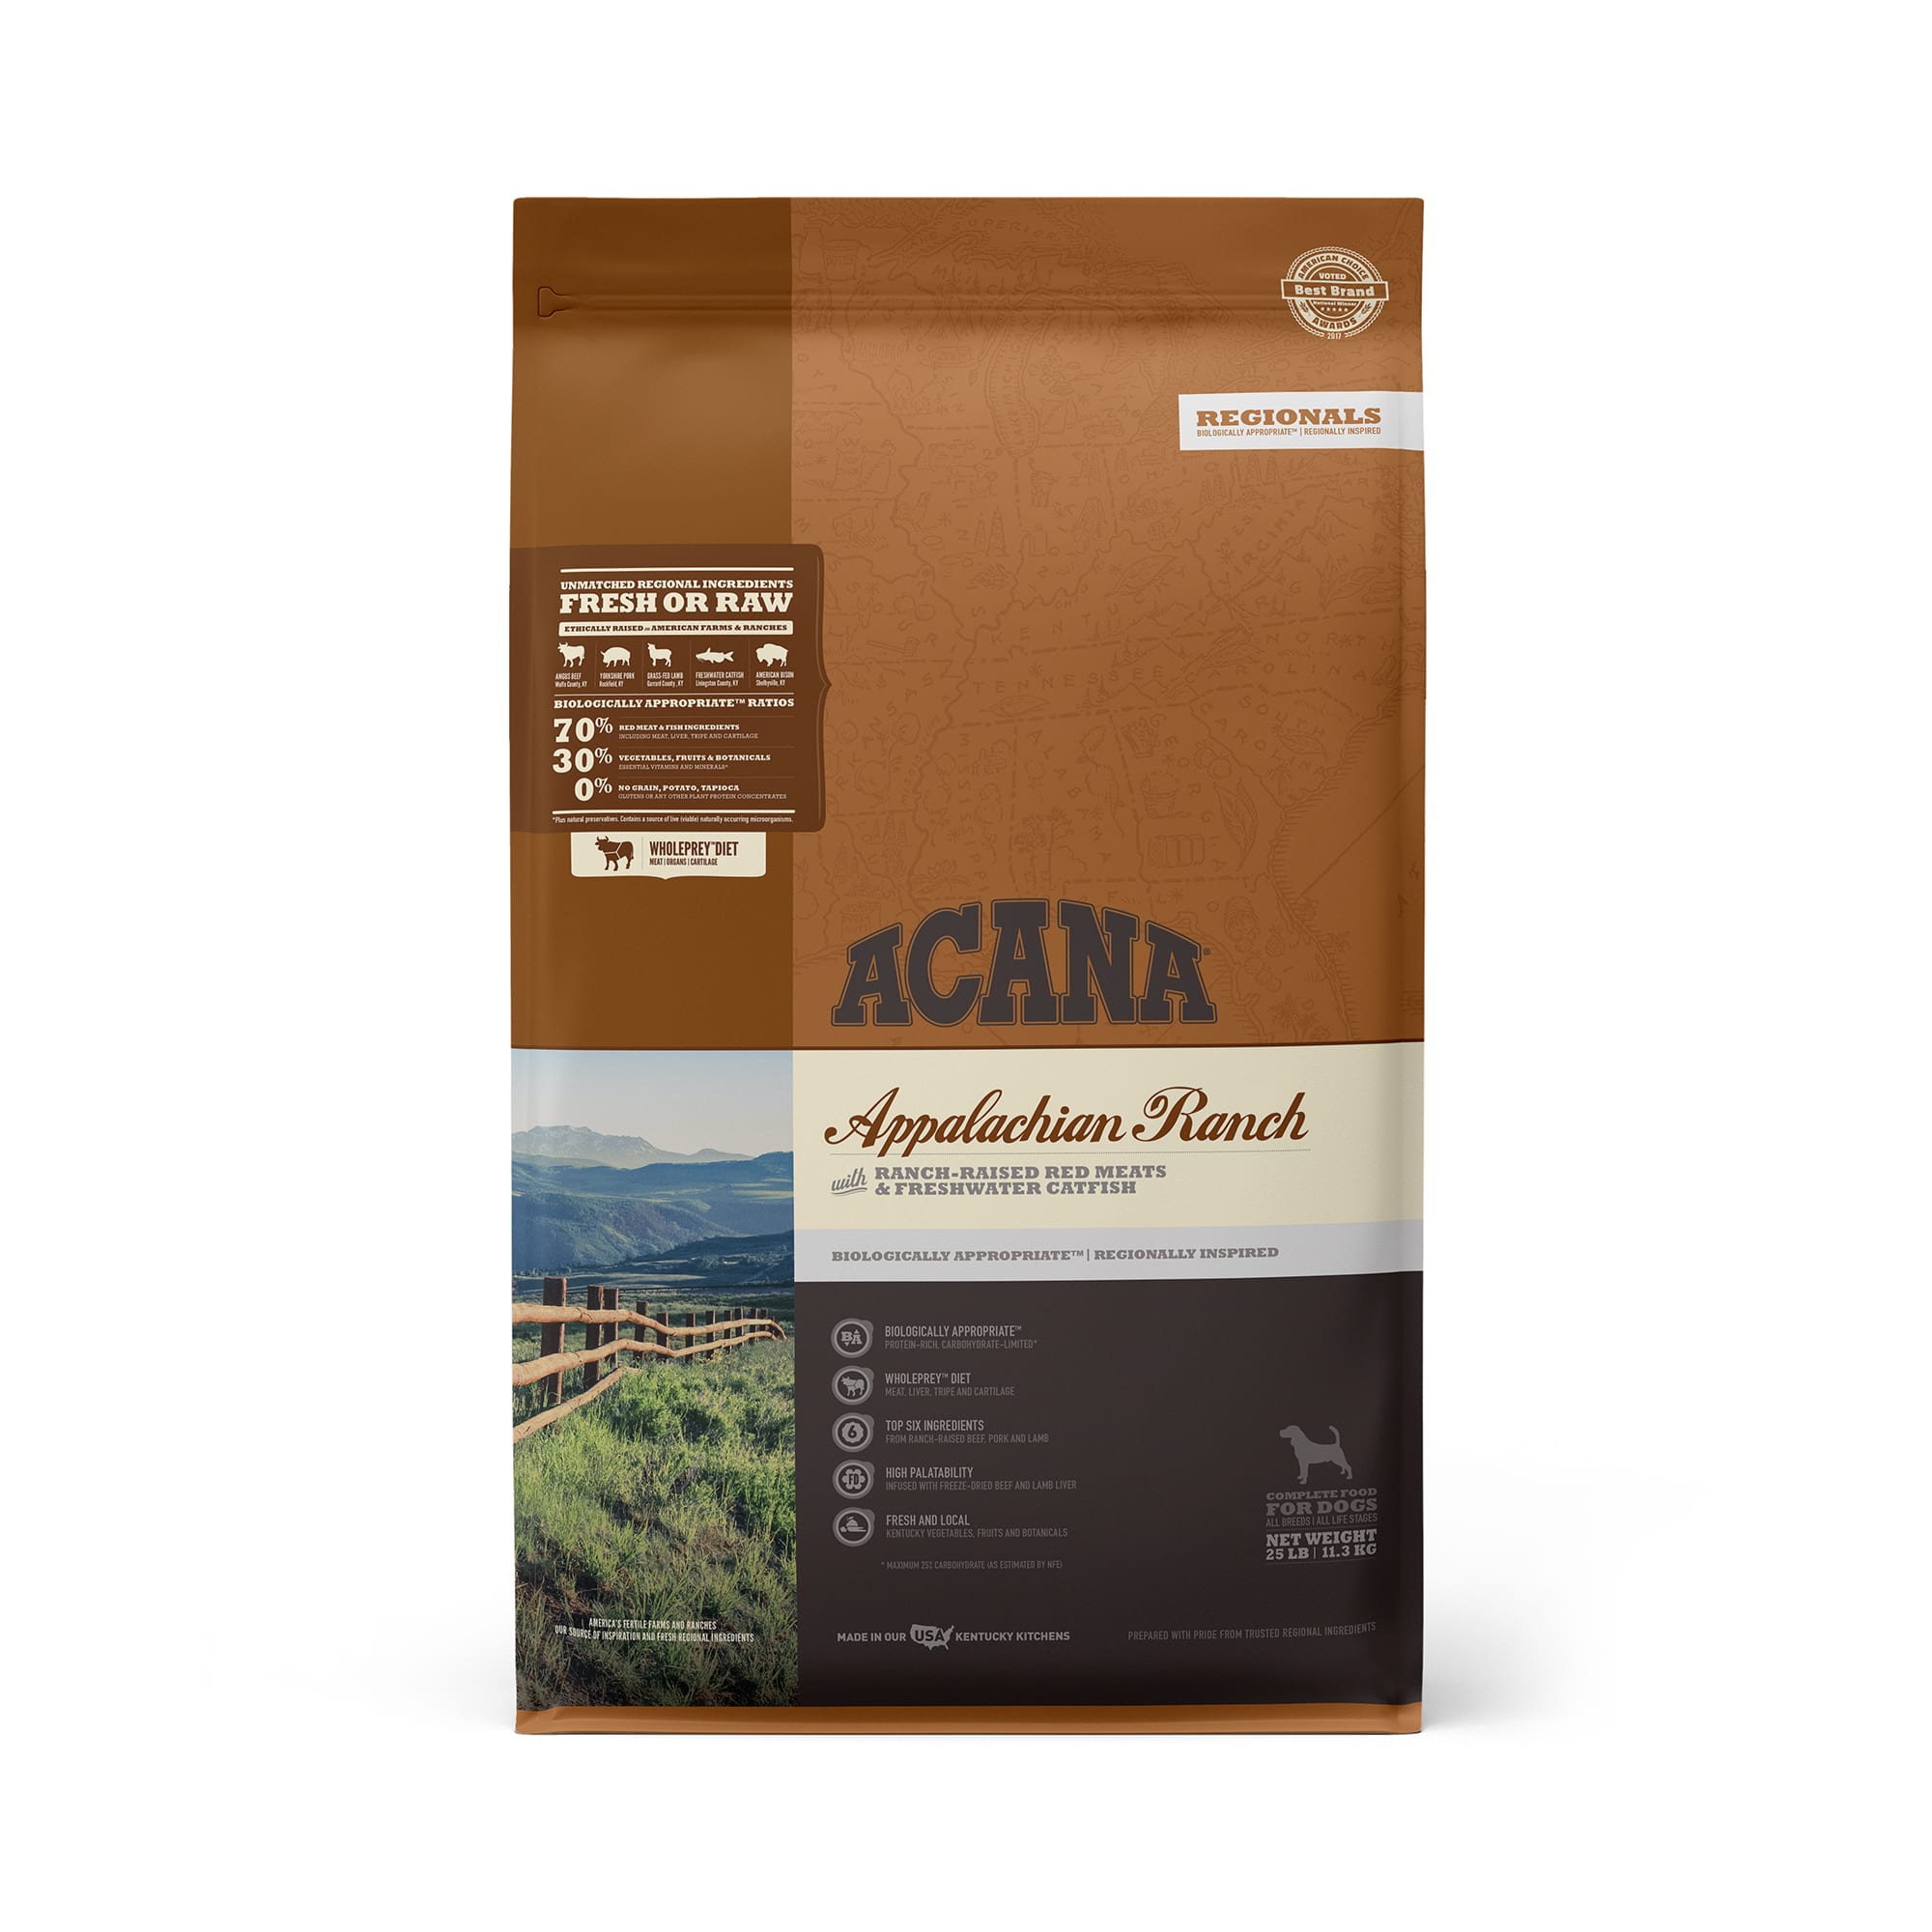 ACANA Appalachian Ranch Regionals Biologically Appropriate Dry Dog Food, 25 LB Bag, 25 LBS